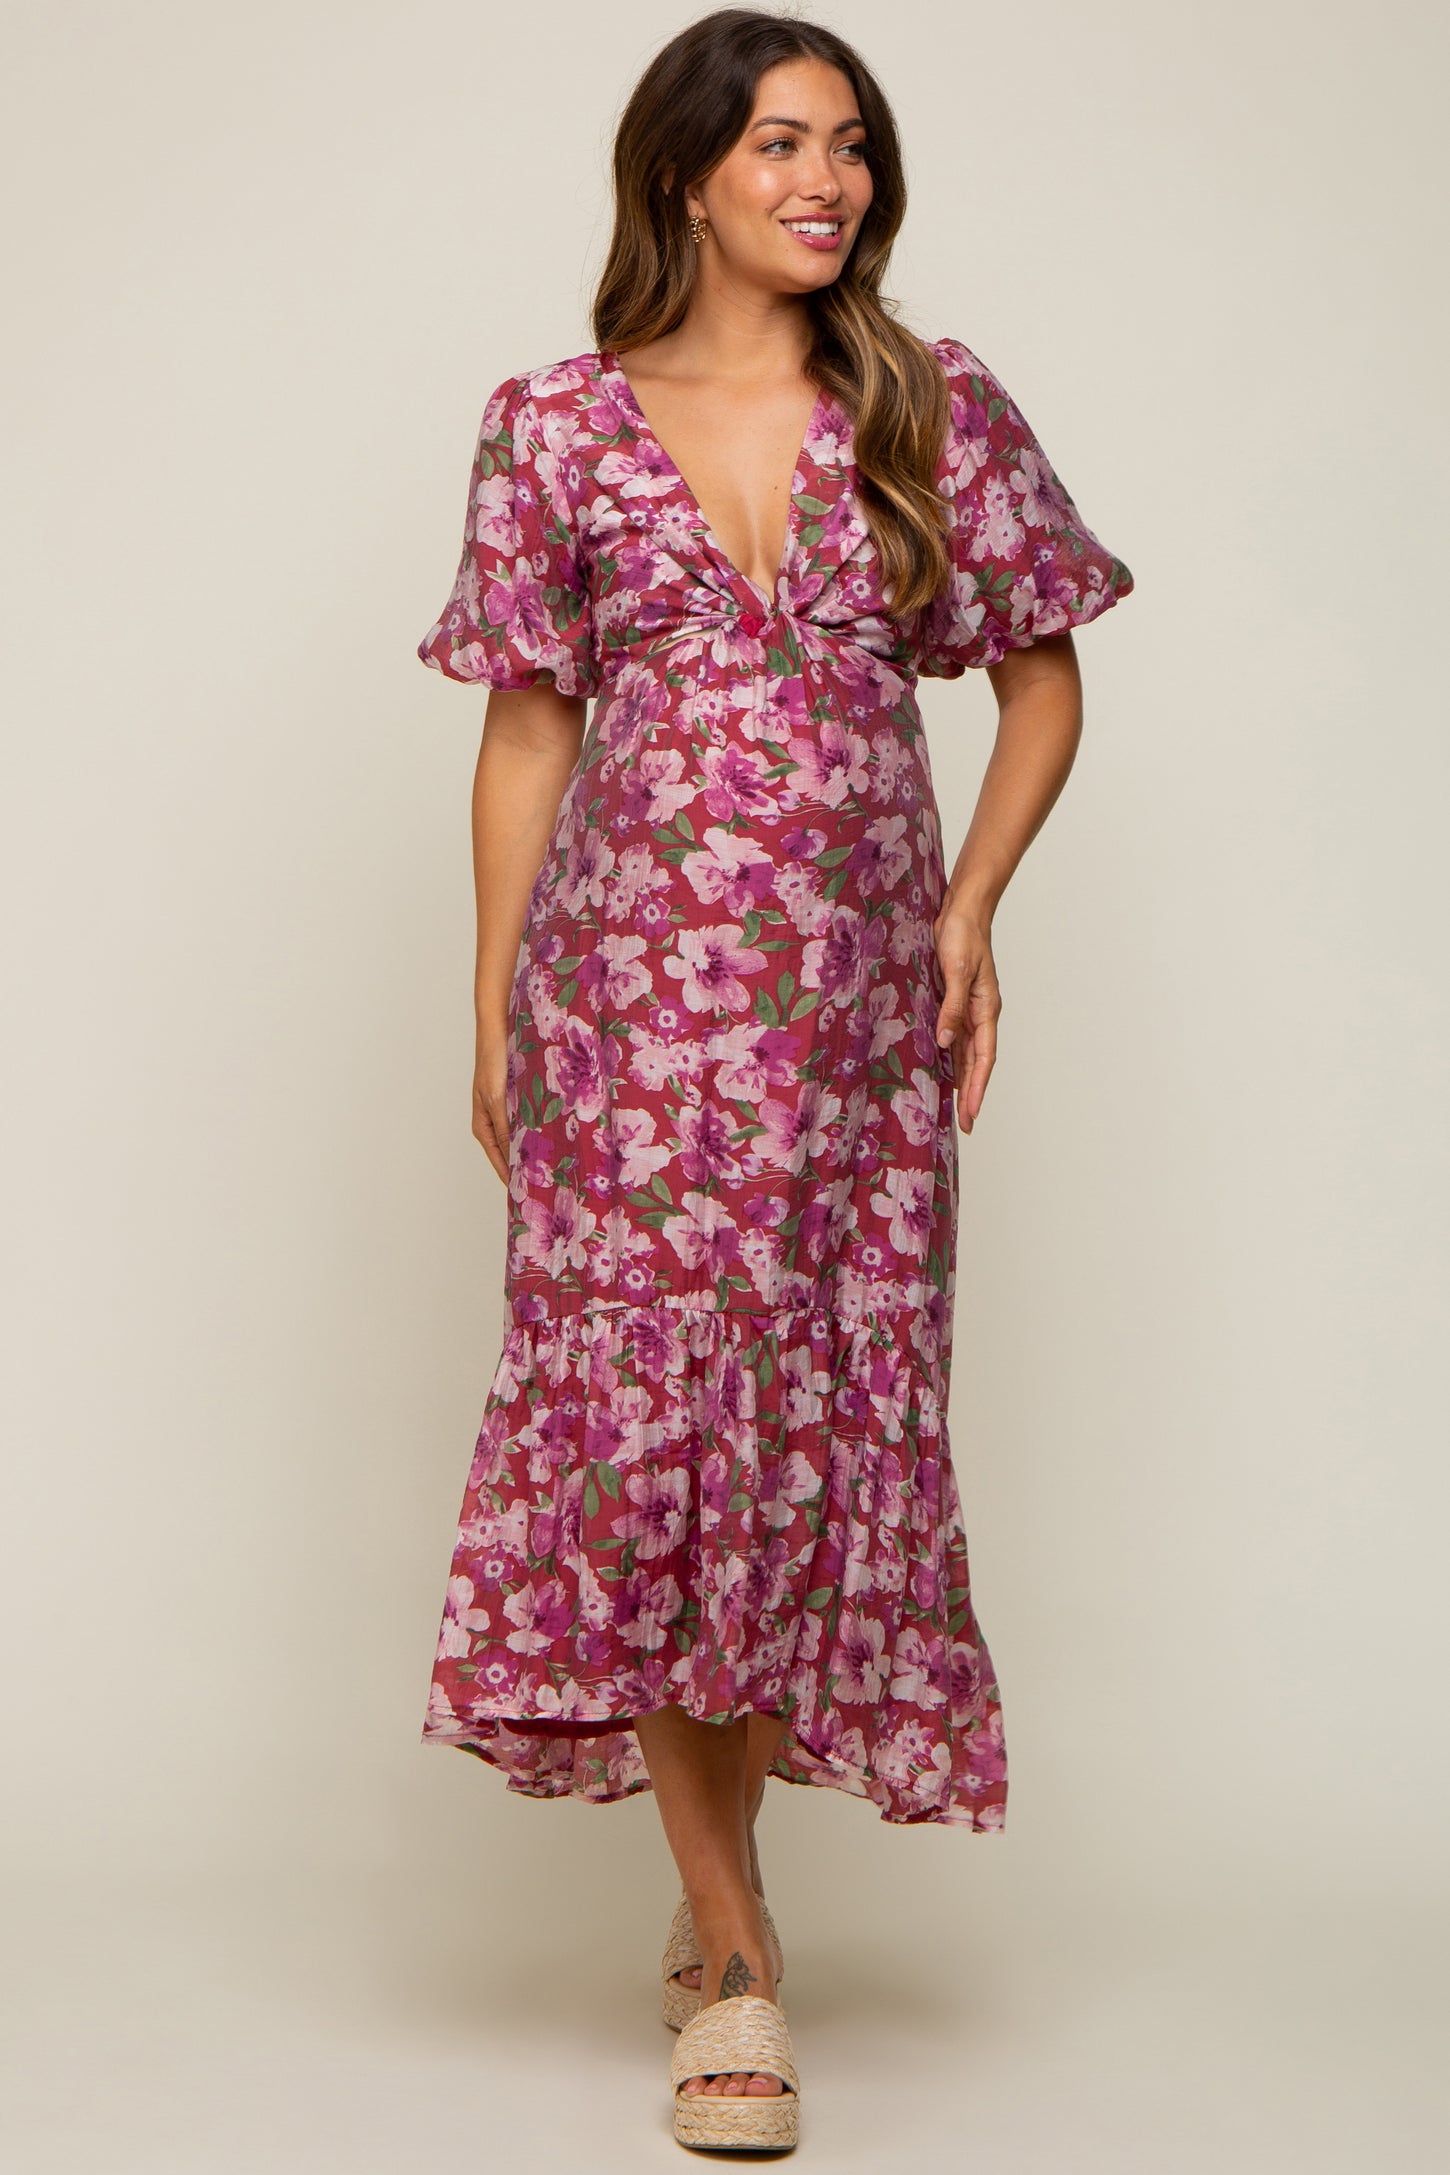 Pinkblush Puff Sleeve Maxi Dresses for Women